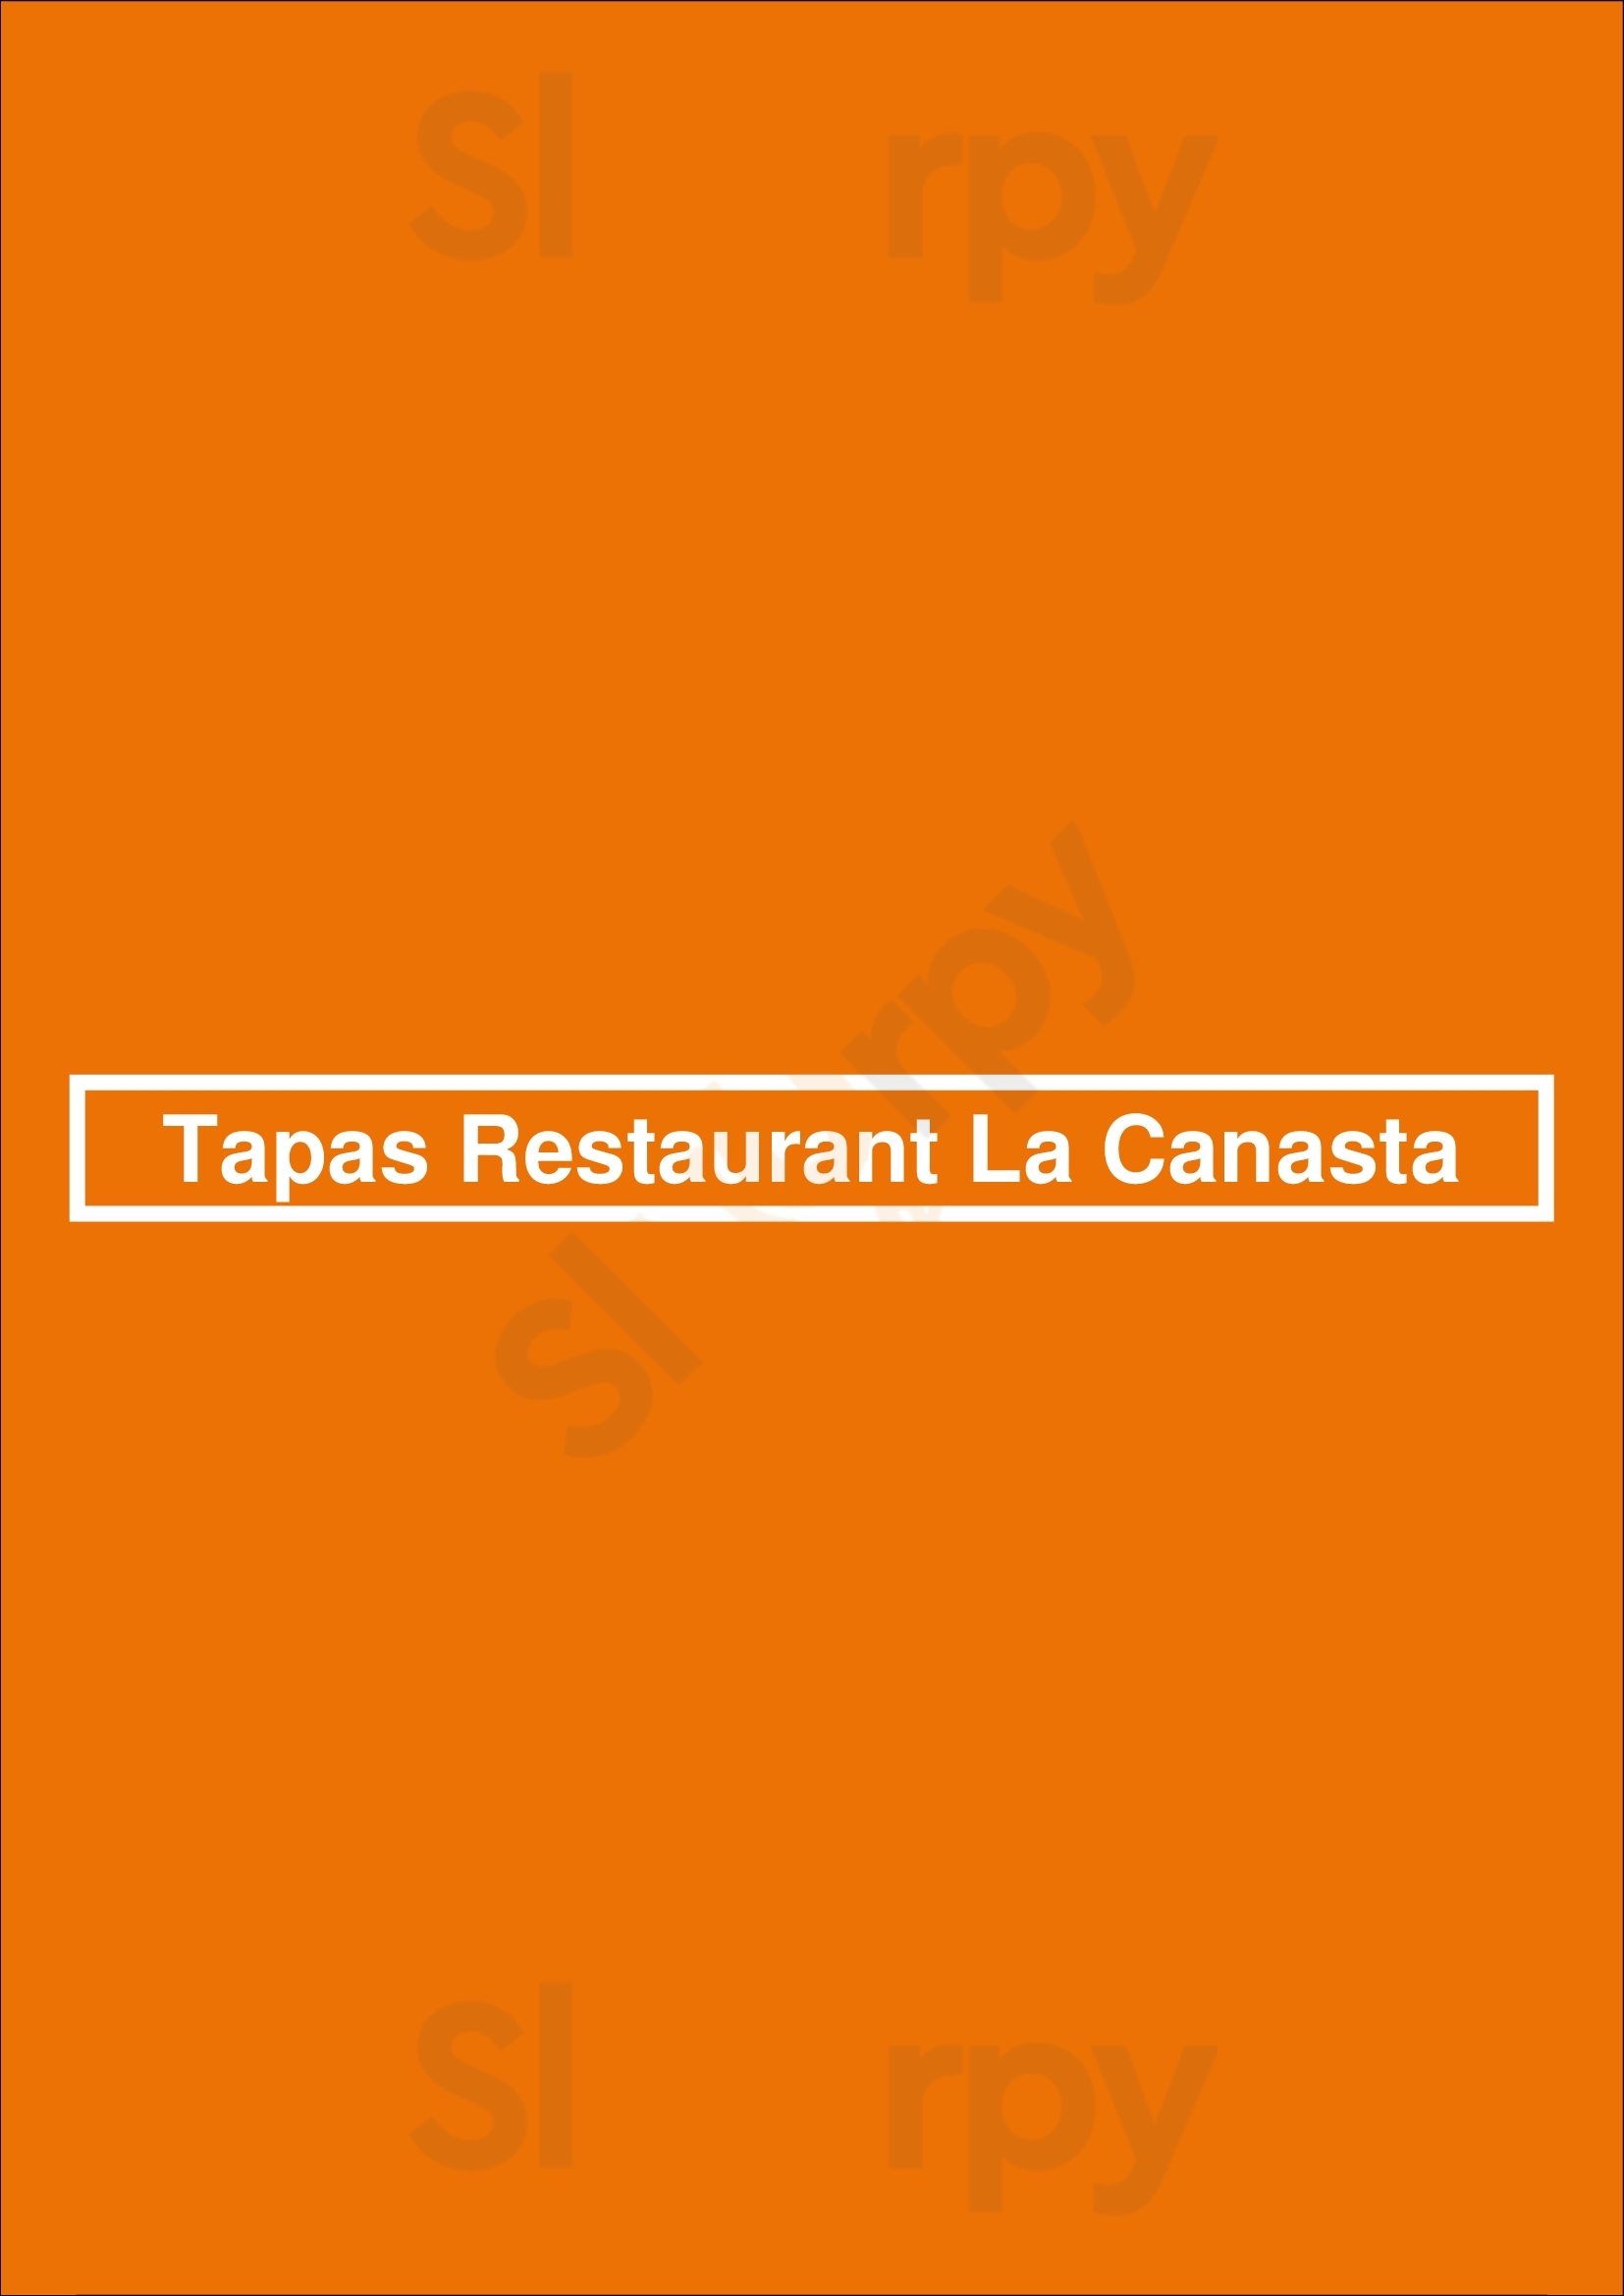 Tapas Restaurant La Canasta Maastricht Menu - 1